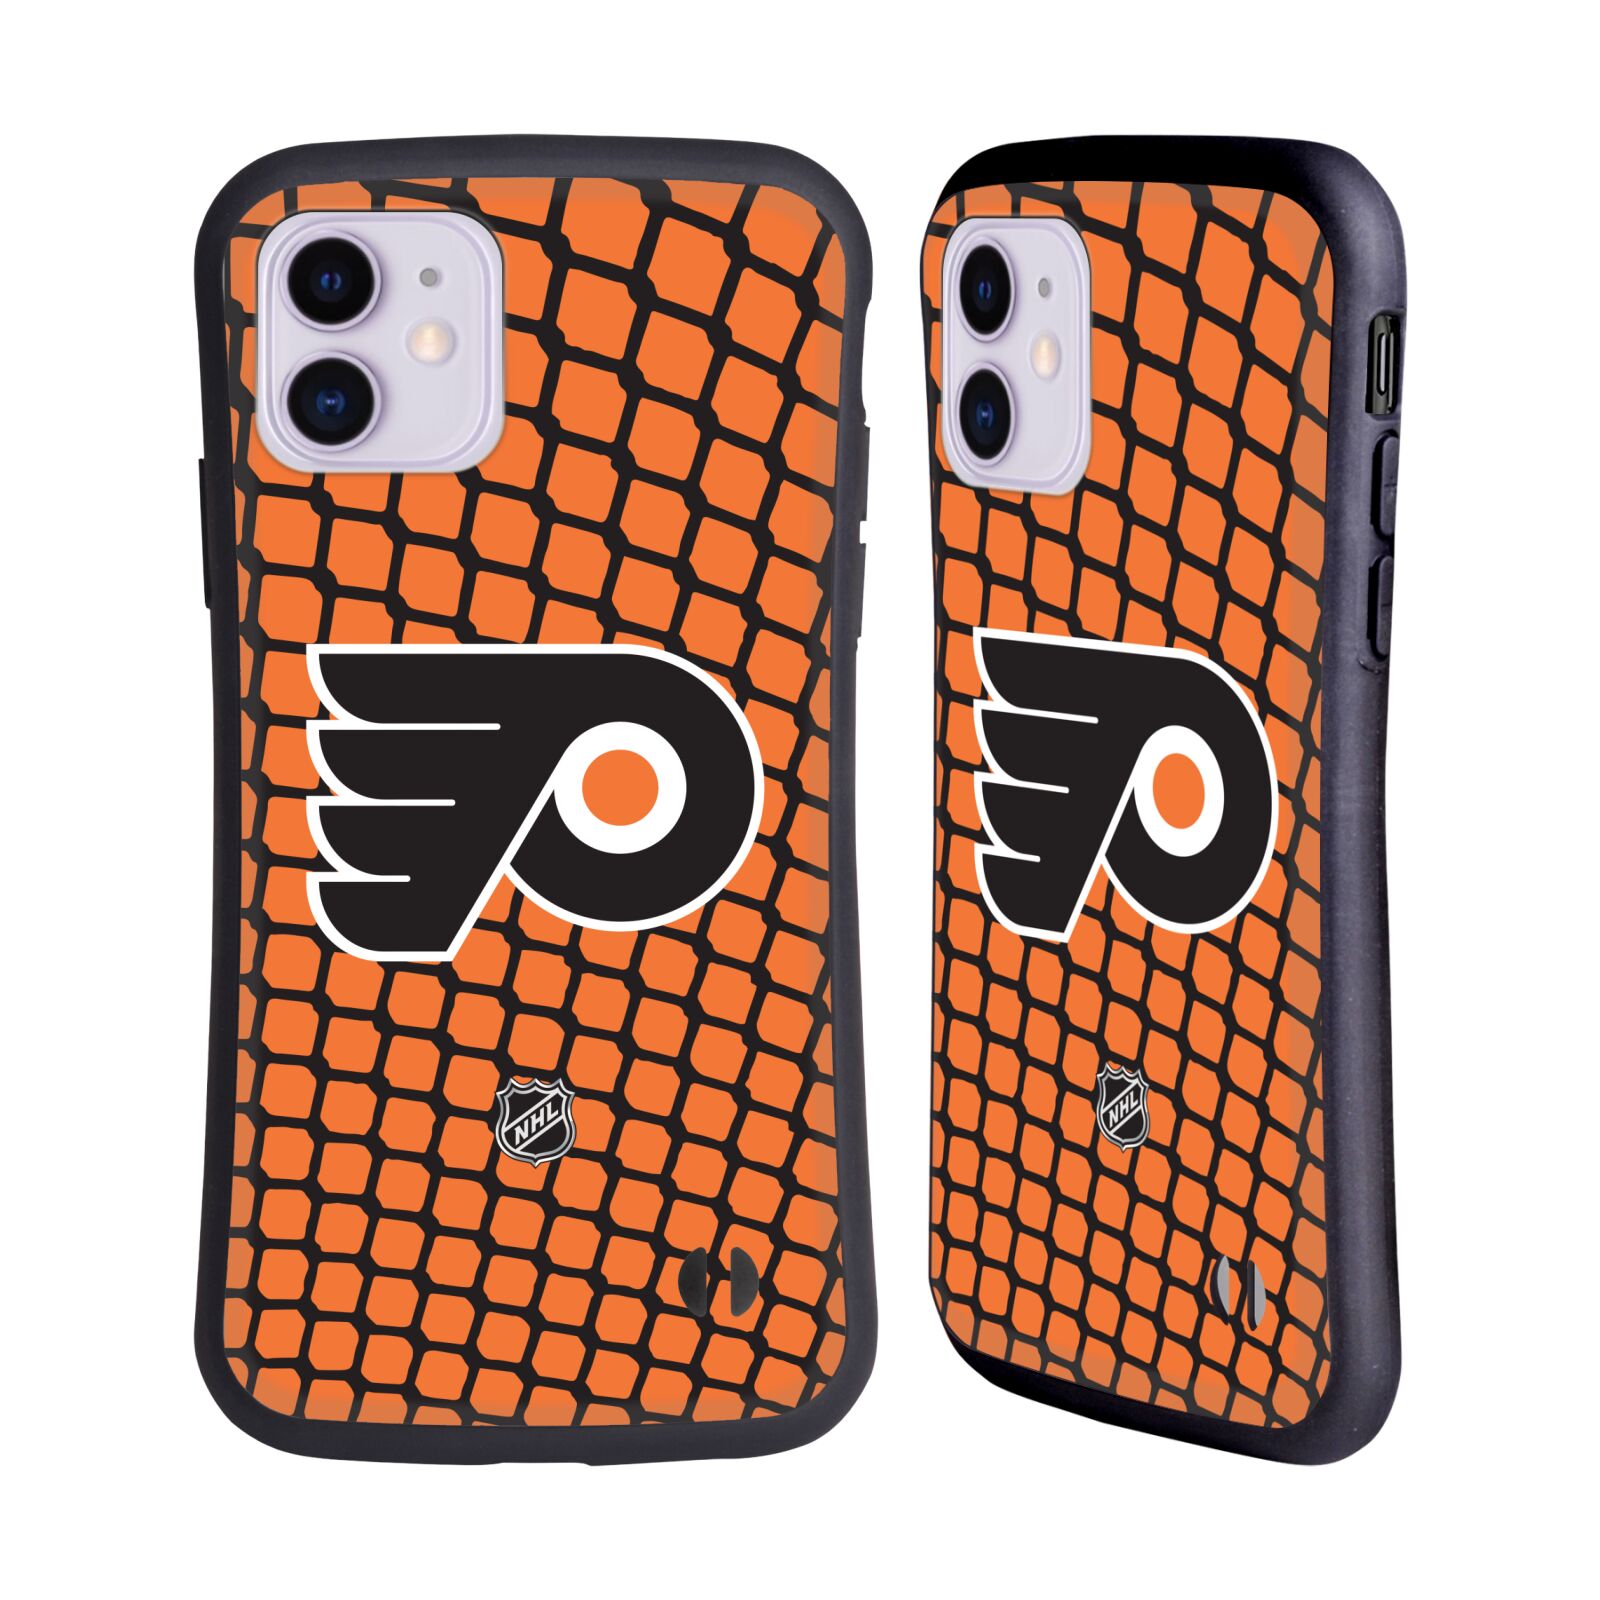 Obal na mobil Apple iPhone 11 - HEAD CASE - NHL - Philadelphia Flyers znak v síti